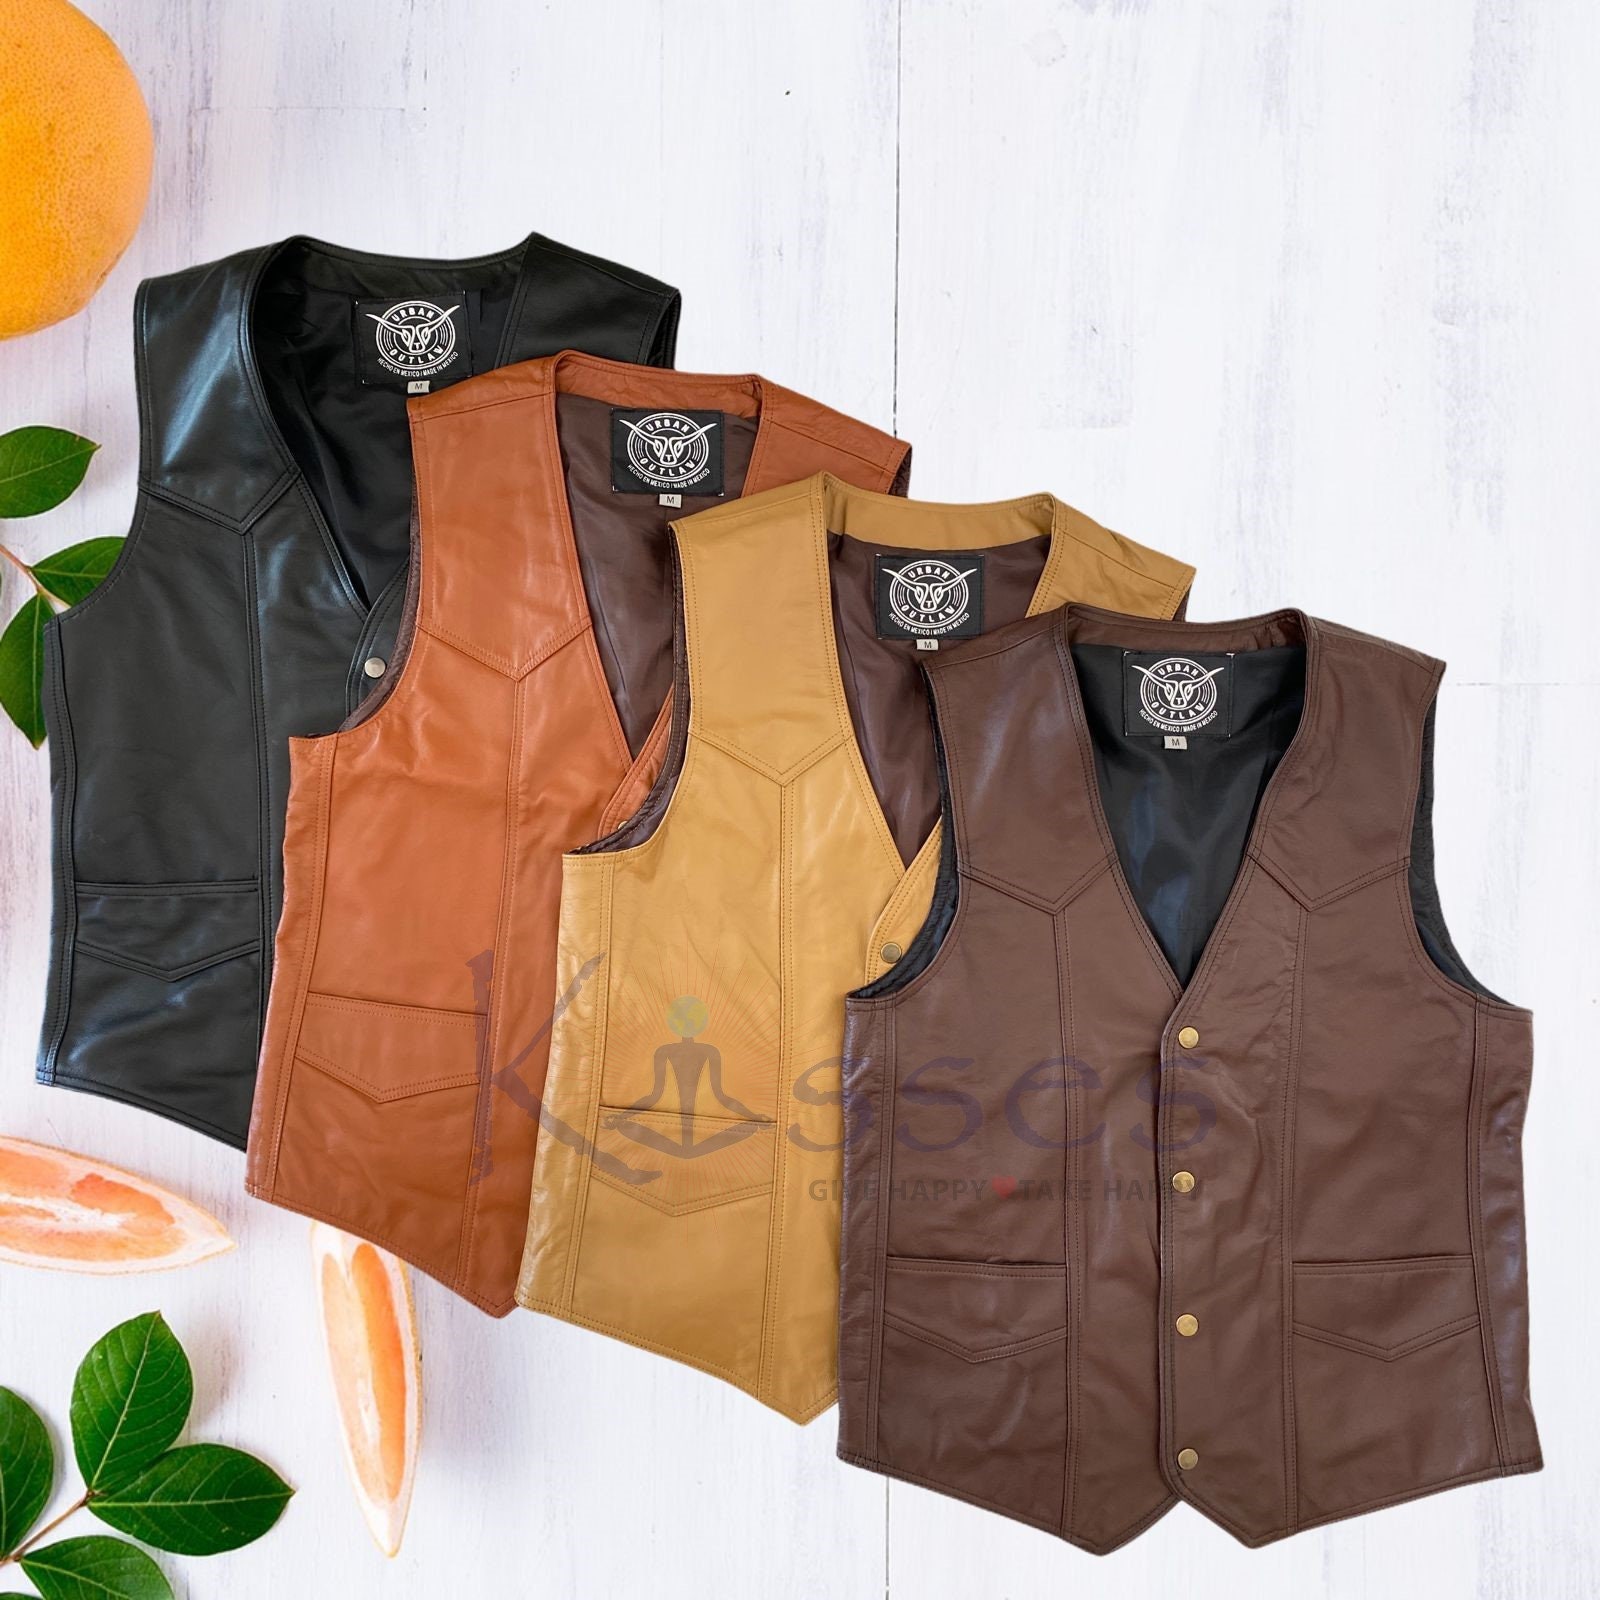 HOMELEX Brown Cowboy Vest for Men - Adult Halloween Leather